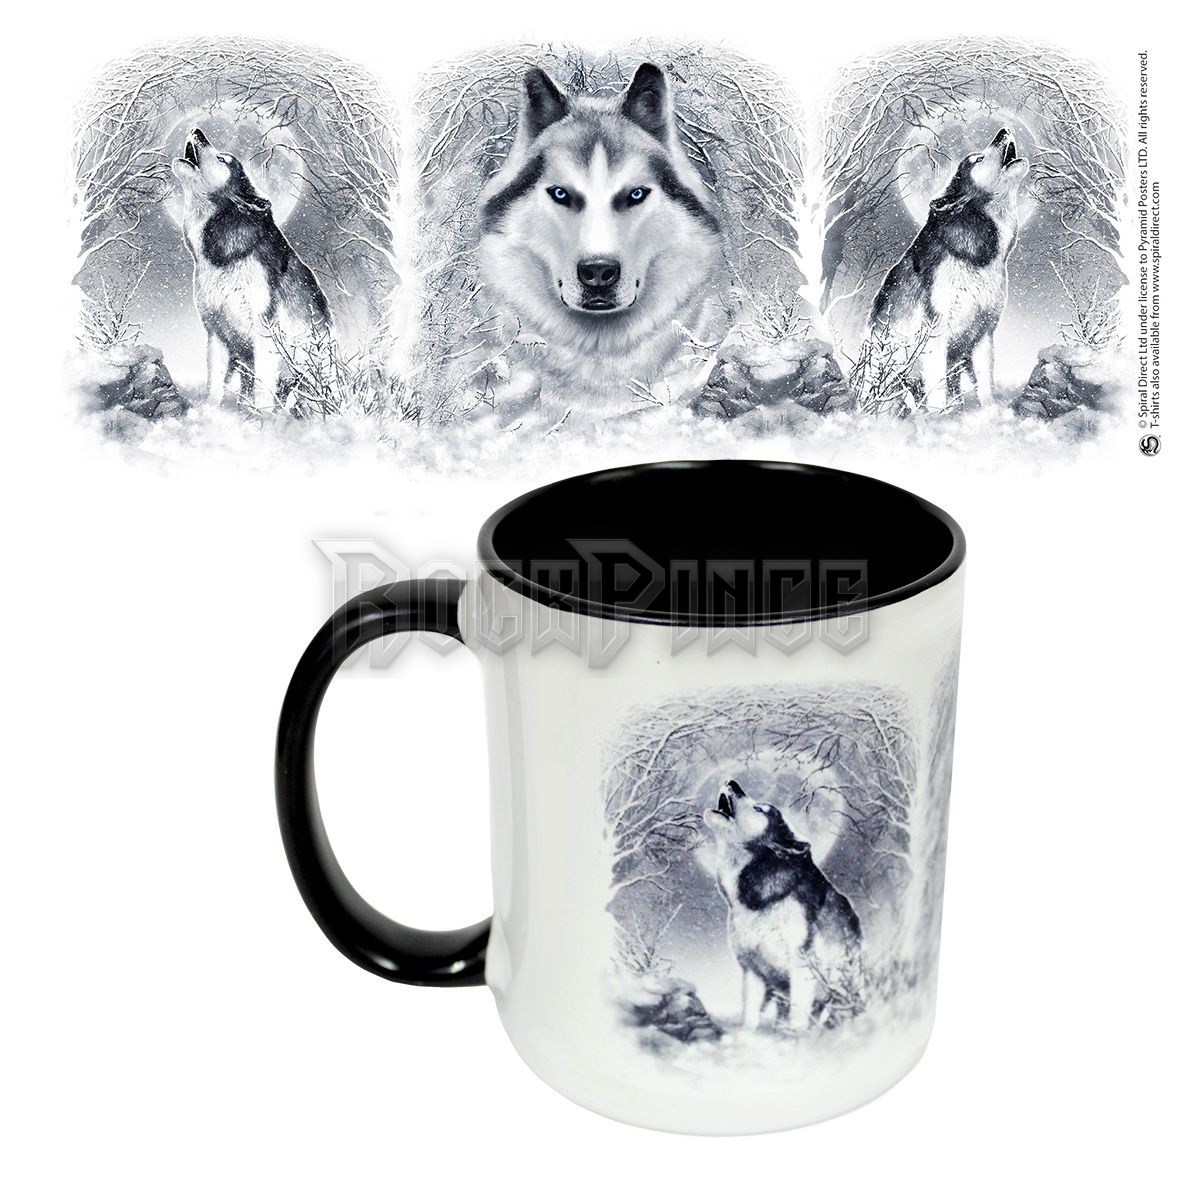 WHITE WOLF - Ceramic Mug 0.3L - T053A003